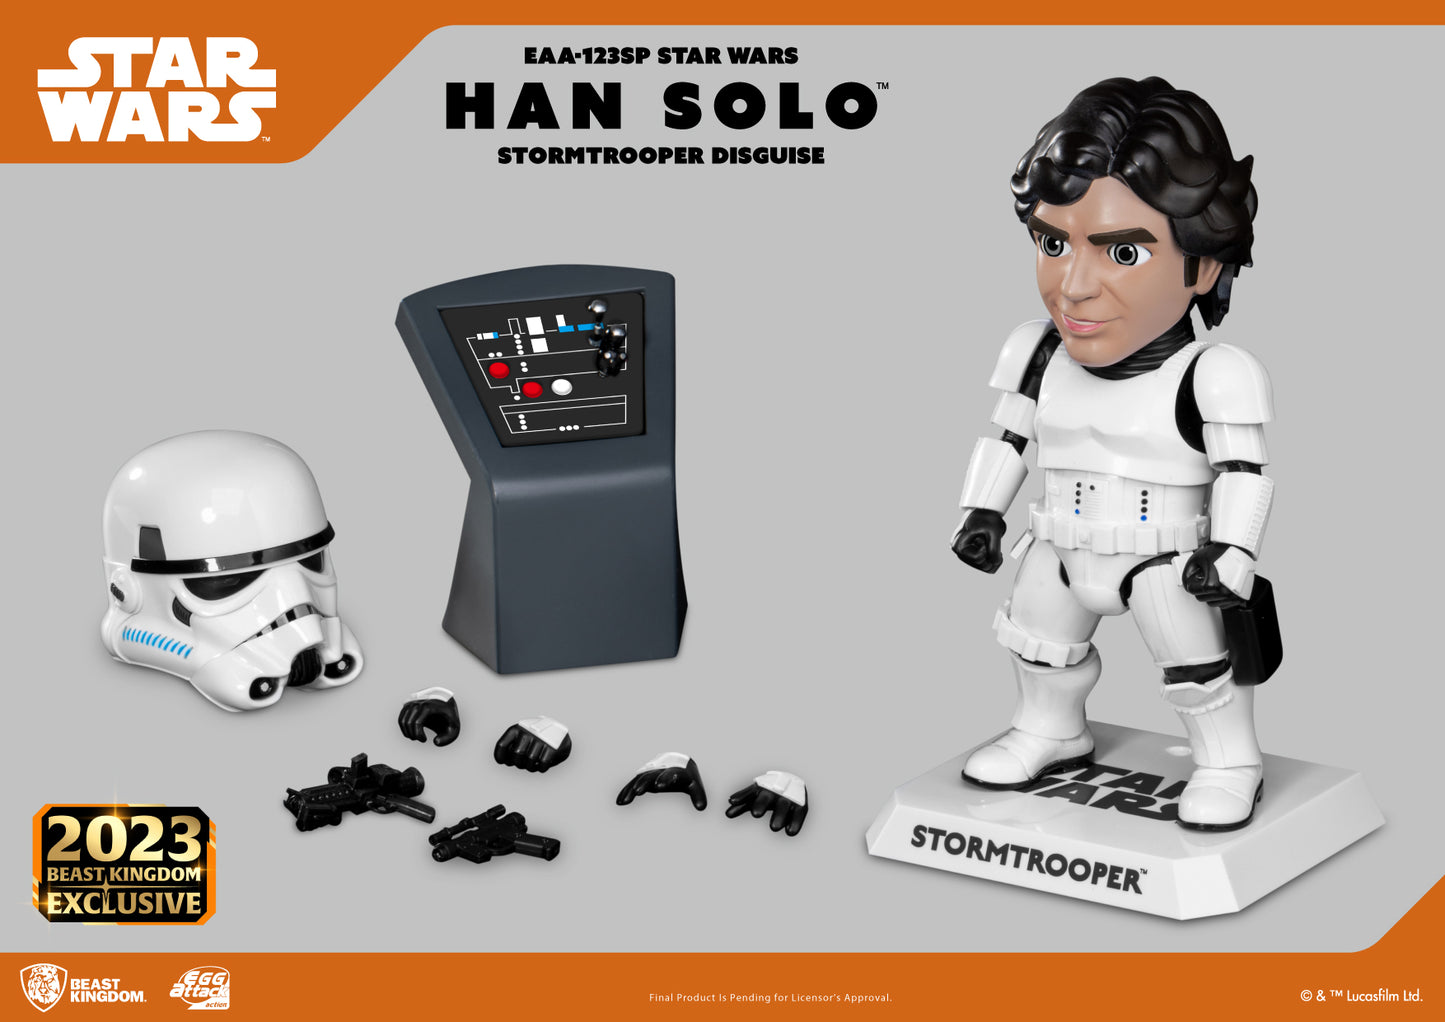 STAR WARS Han Solo (Stormtrooper Disguise) EAA-123SP